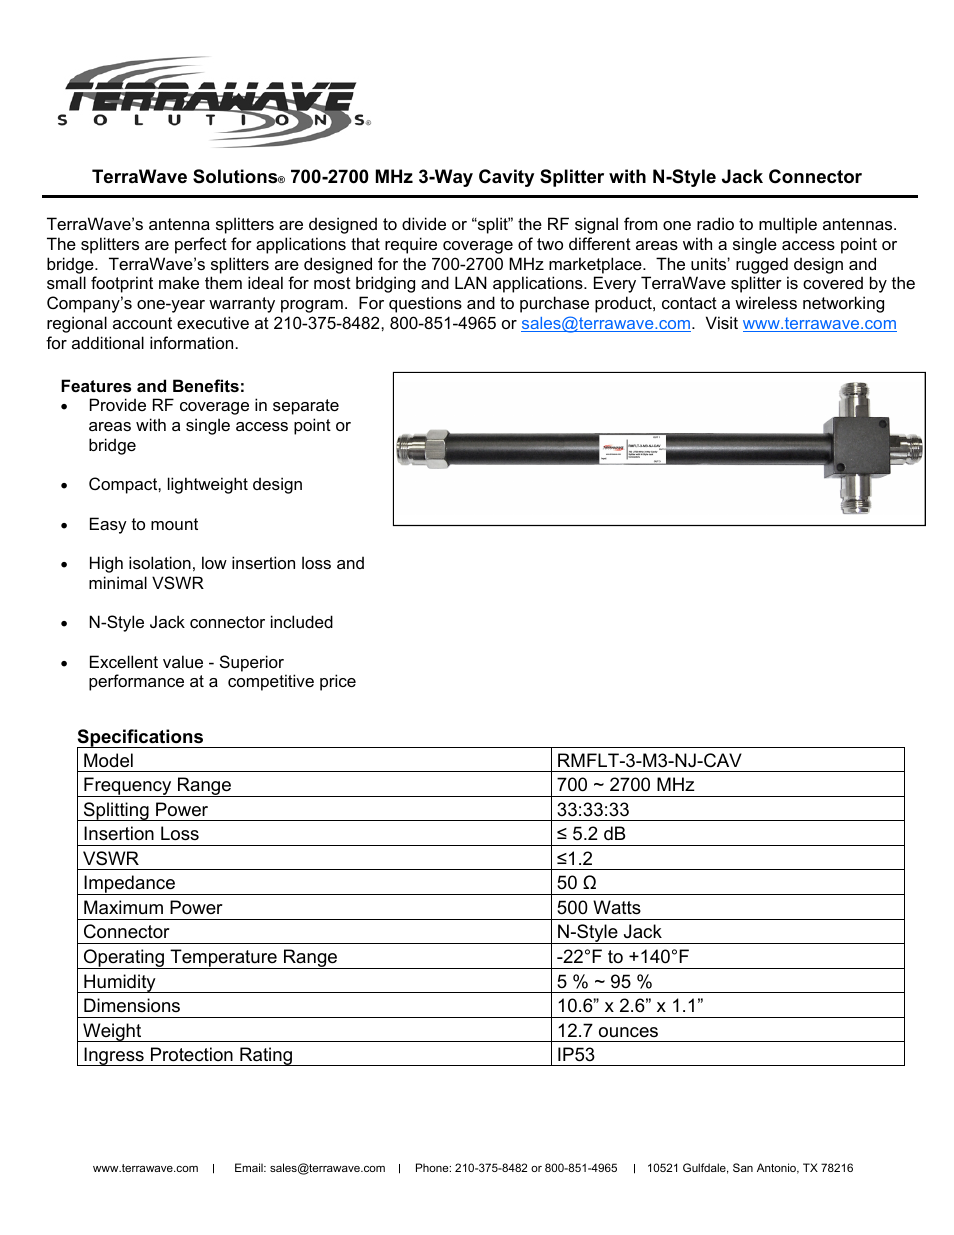 TerraWave RMFLT-3-M3-NJ-CAV User Manual | 1 page